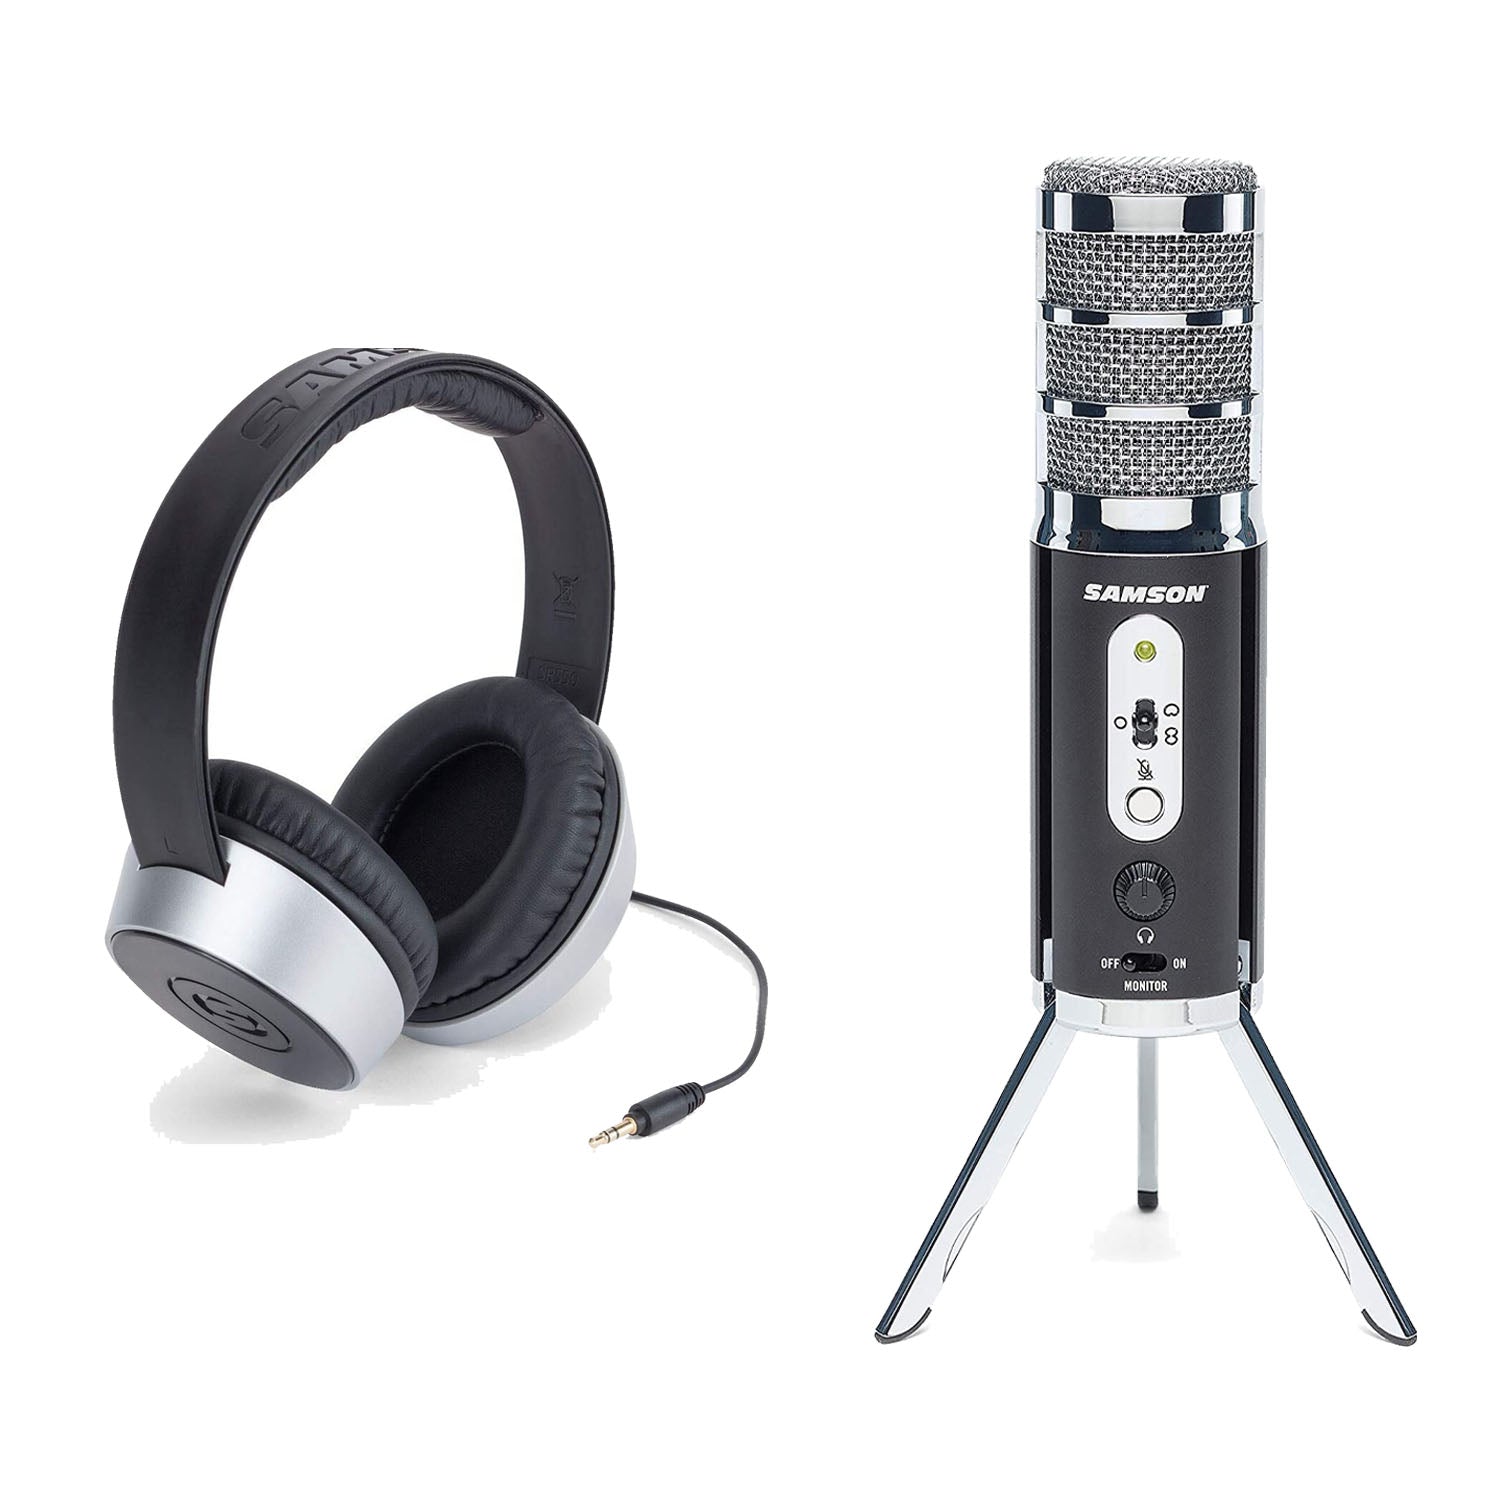 Samson Satellite Broadcast Microphone SR550 Closed Back Studio Headphones Bundle - Pro-Distributing